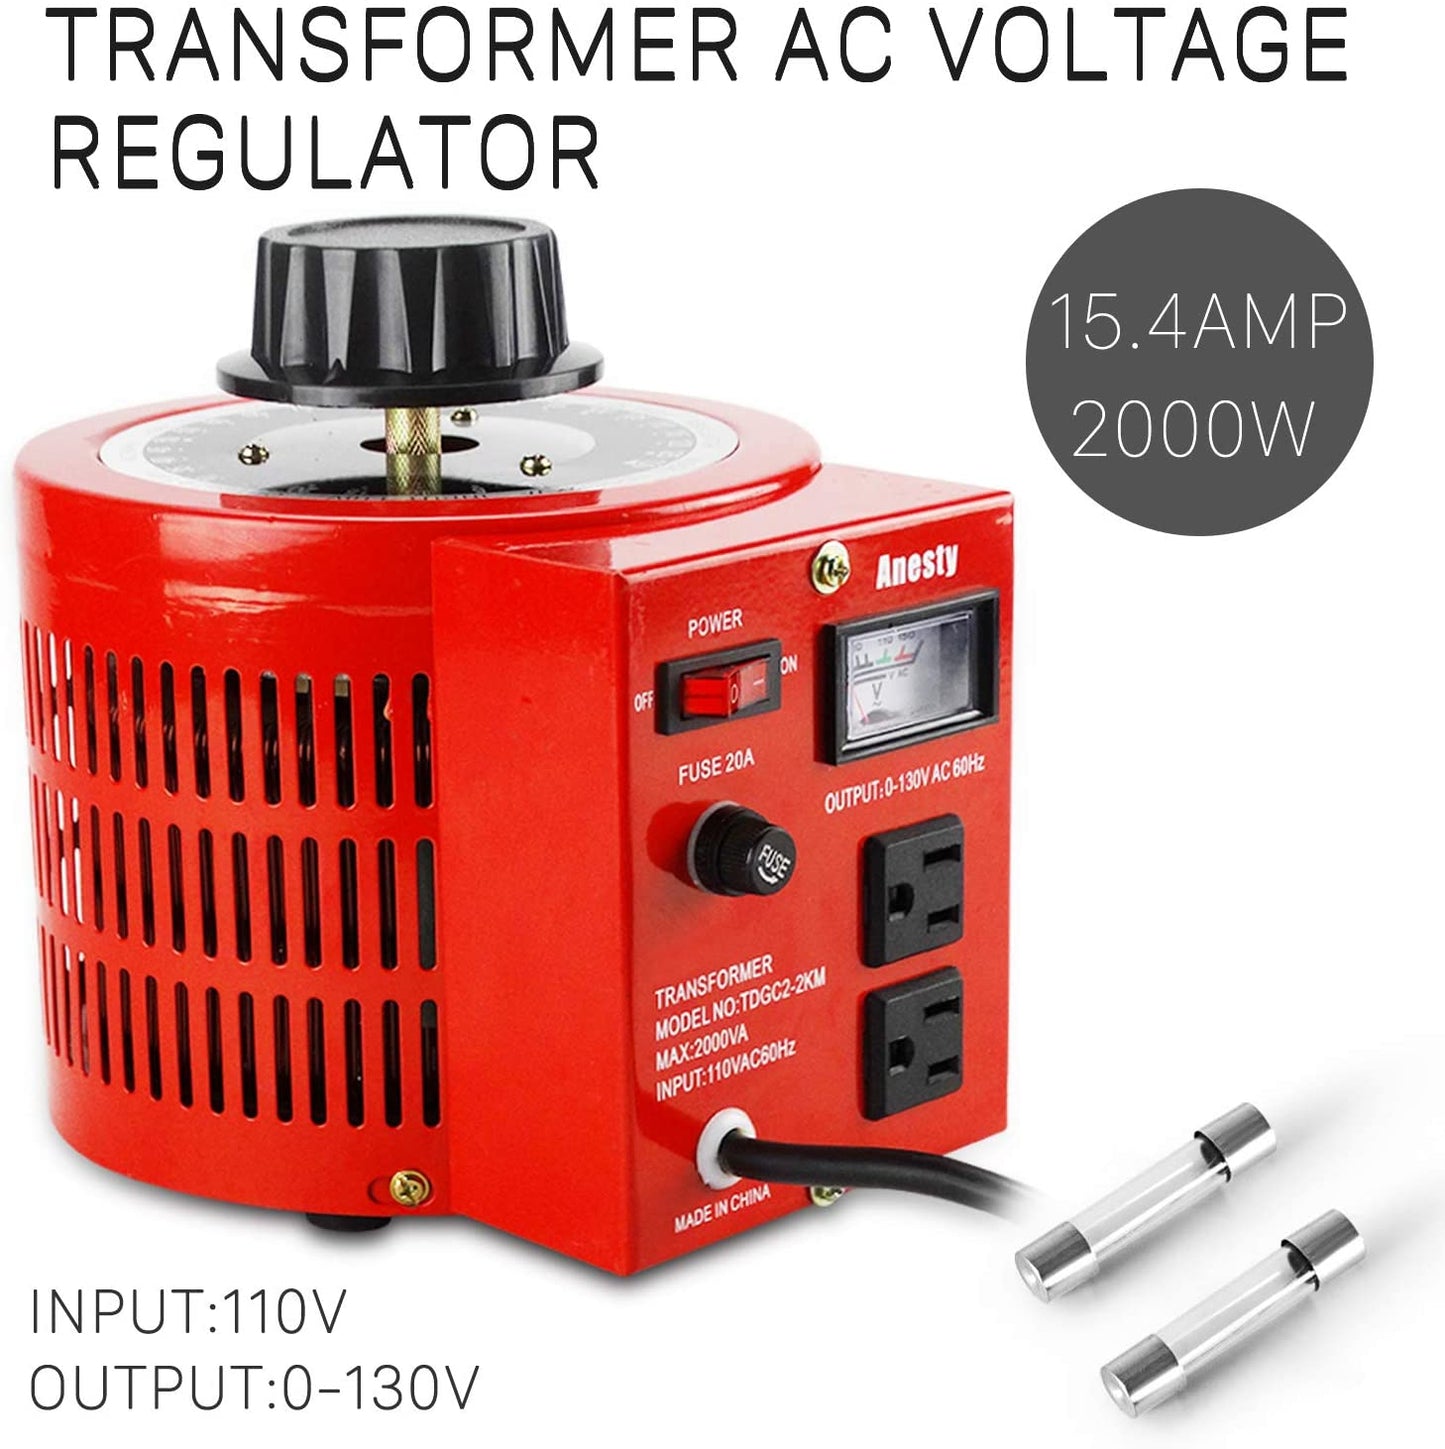 Anesty Transformador automático AC convertidor de voltaje variable transformador regulador 2KVA 0-130V